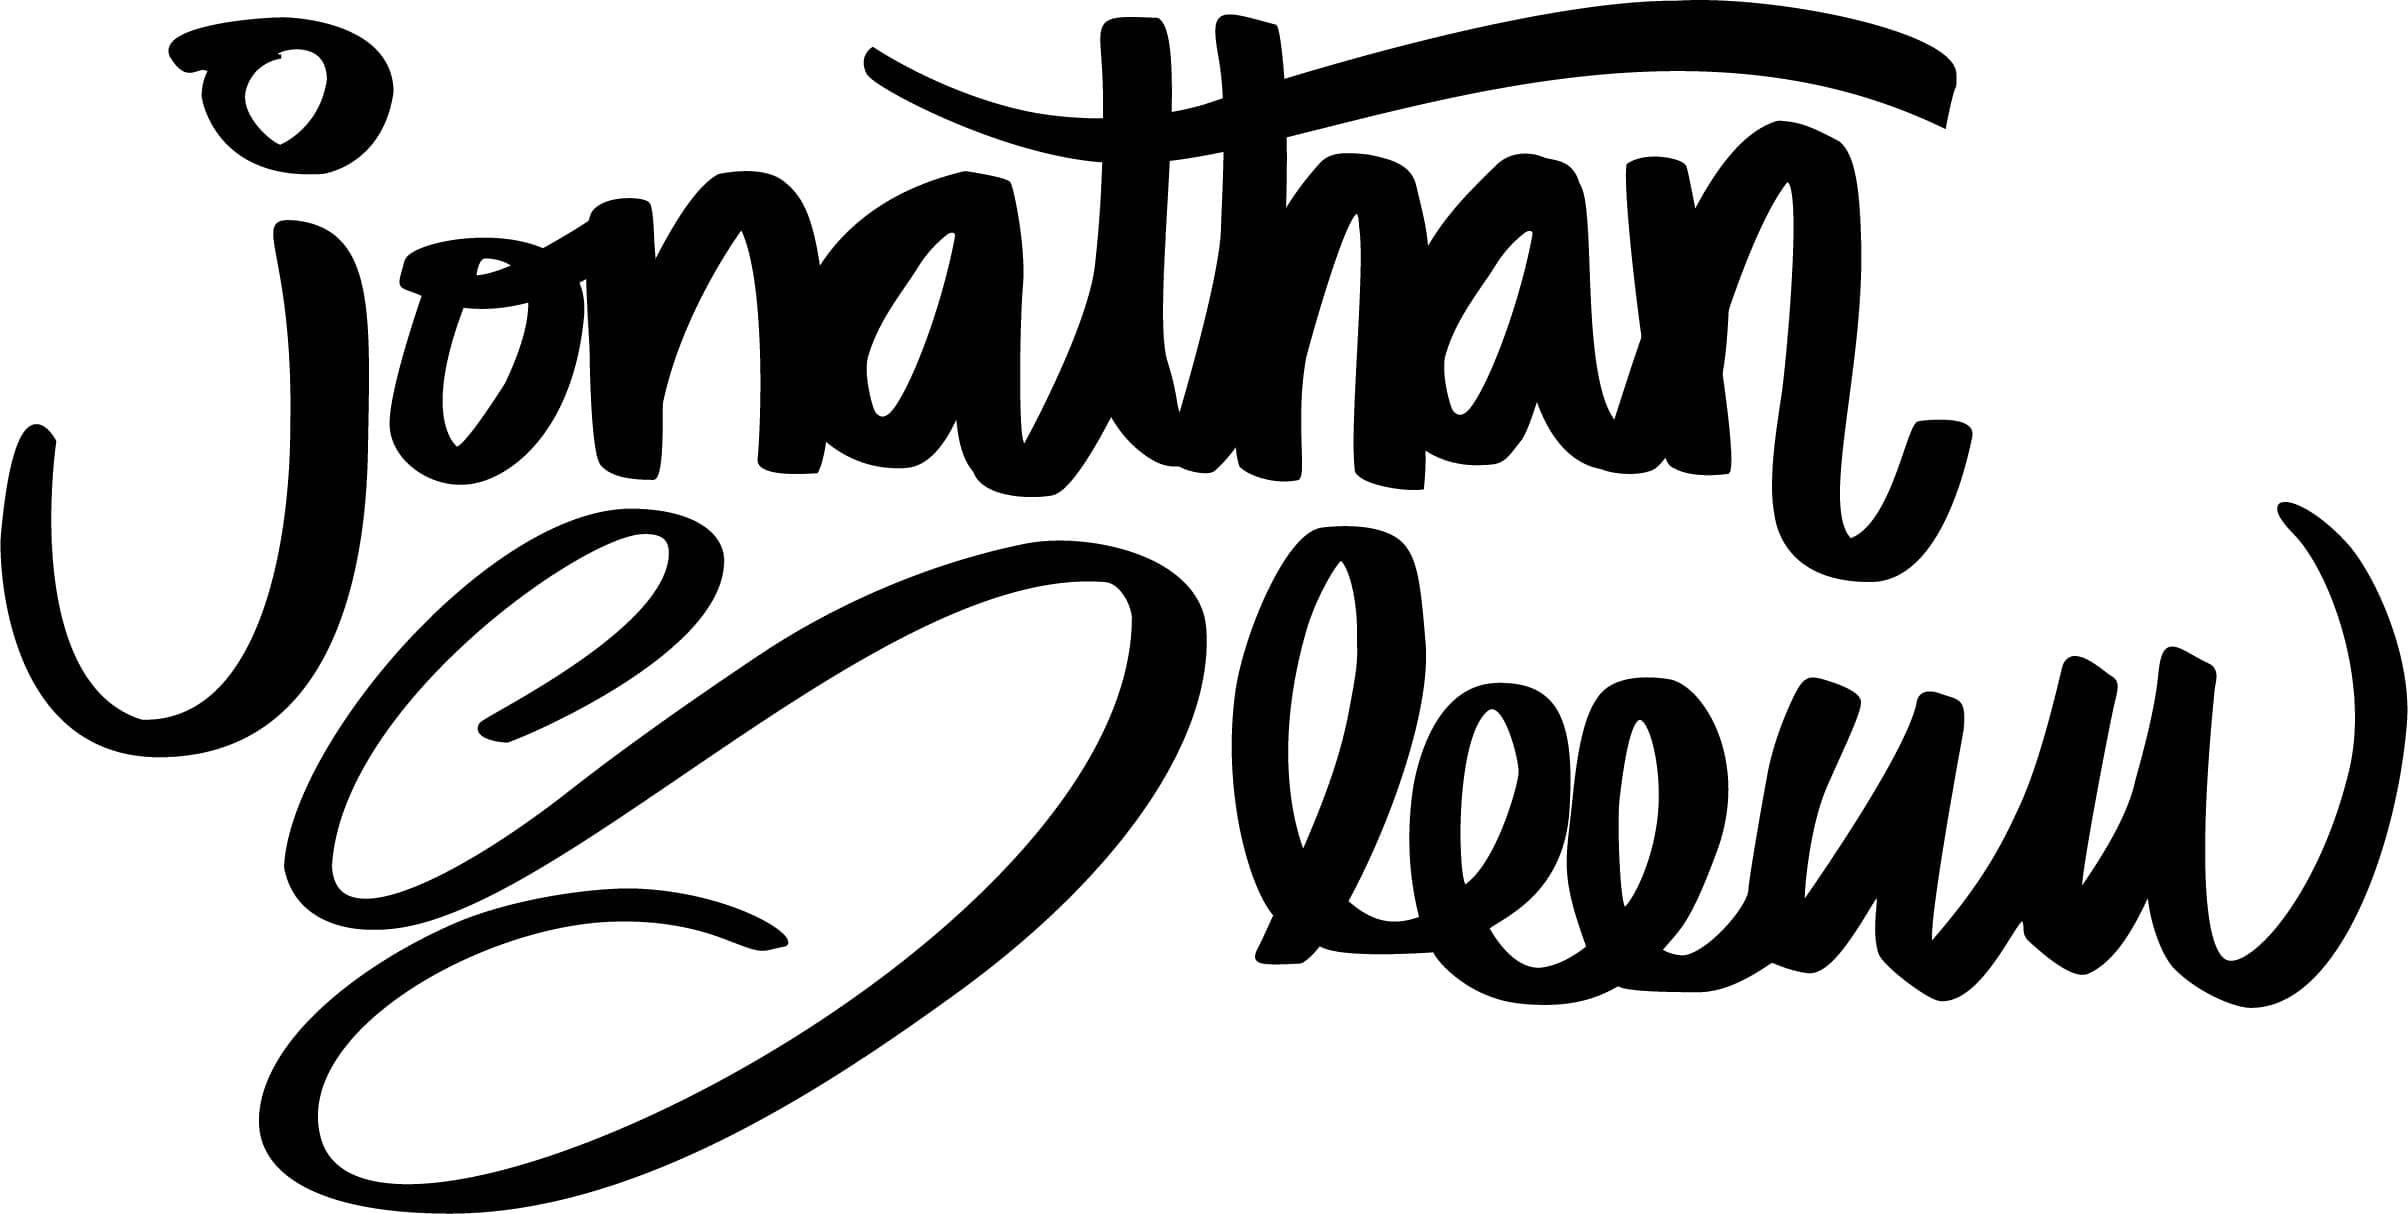 Jonathan Sleeuw logo – Brett Peary